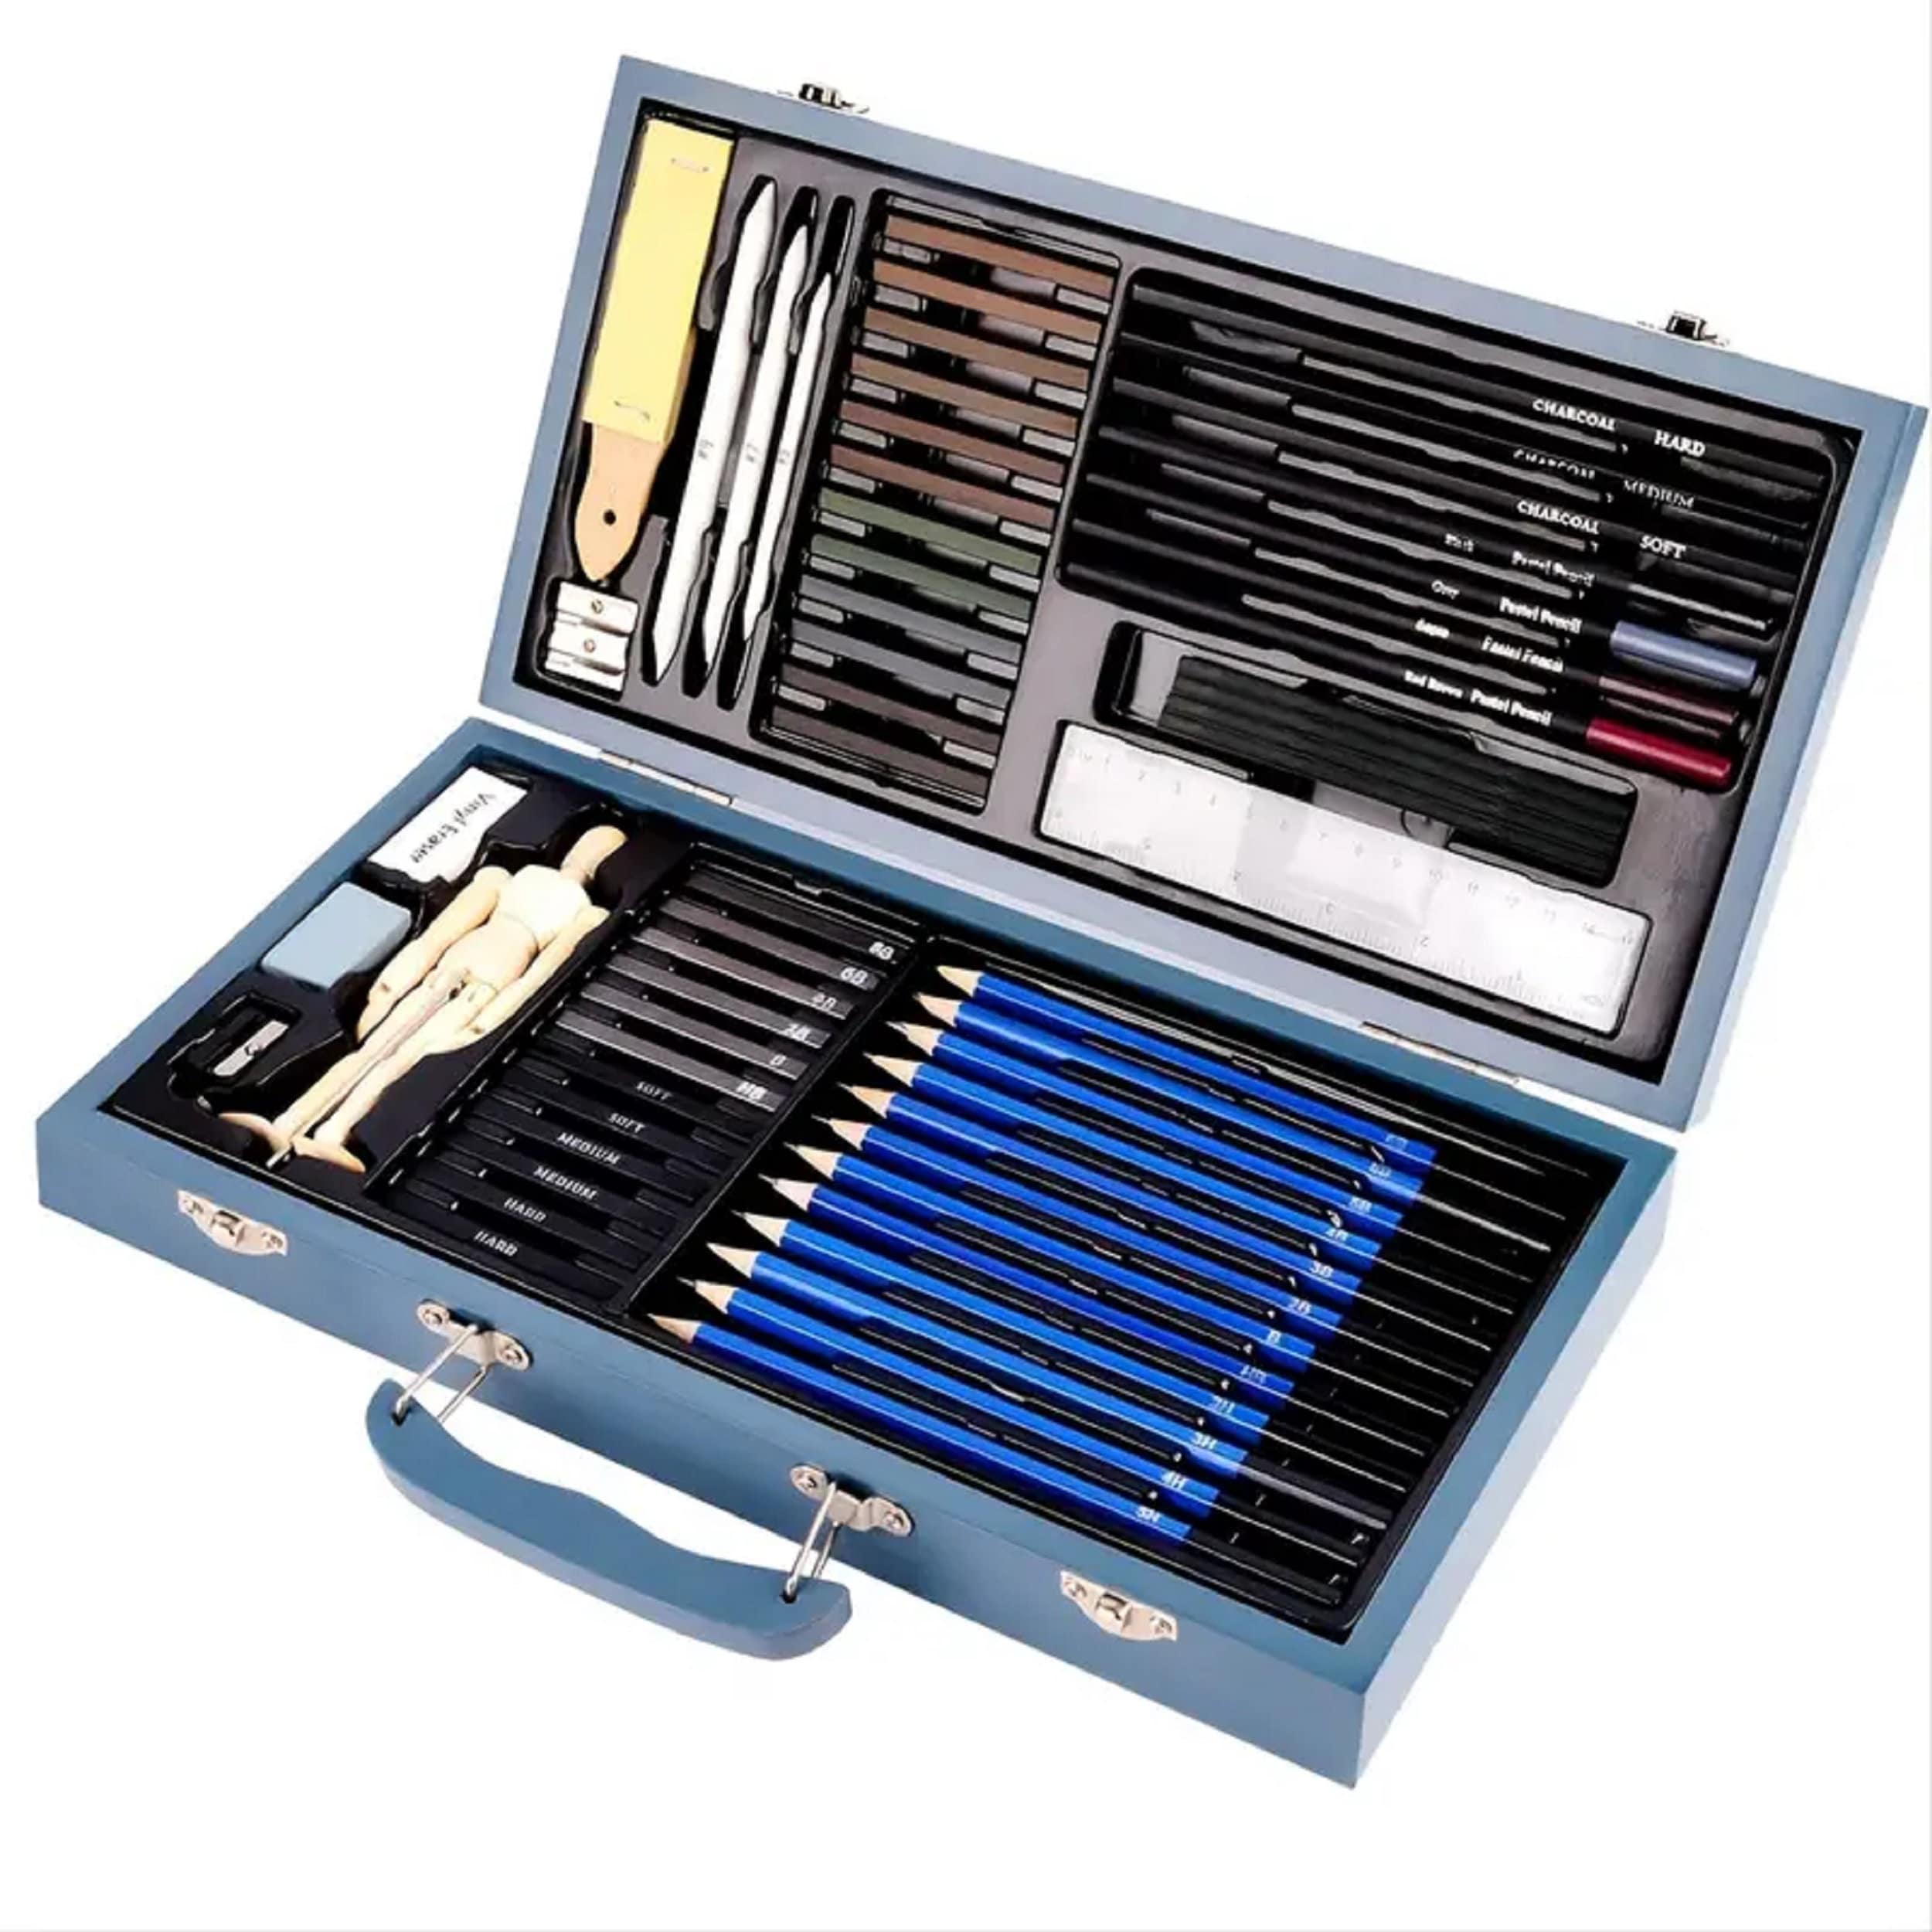 DOMS School Essentials Series My 1st Pencil Kit - Art Kit  for Students & Gifting x 40 Set - Art Kit